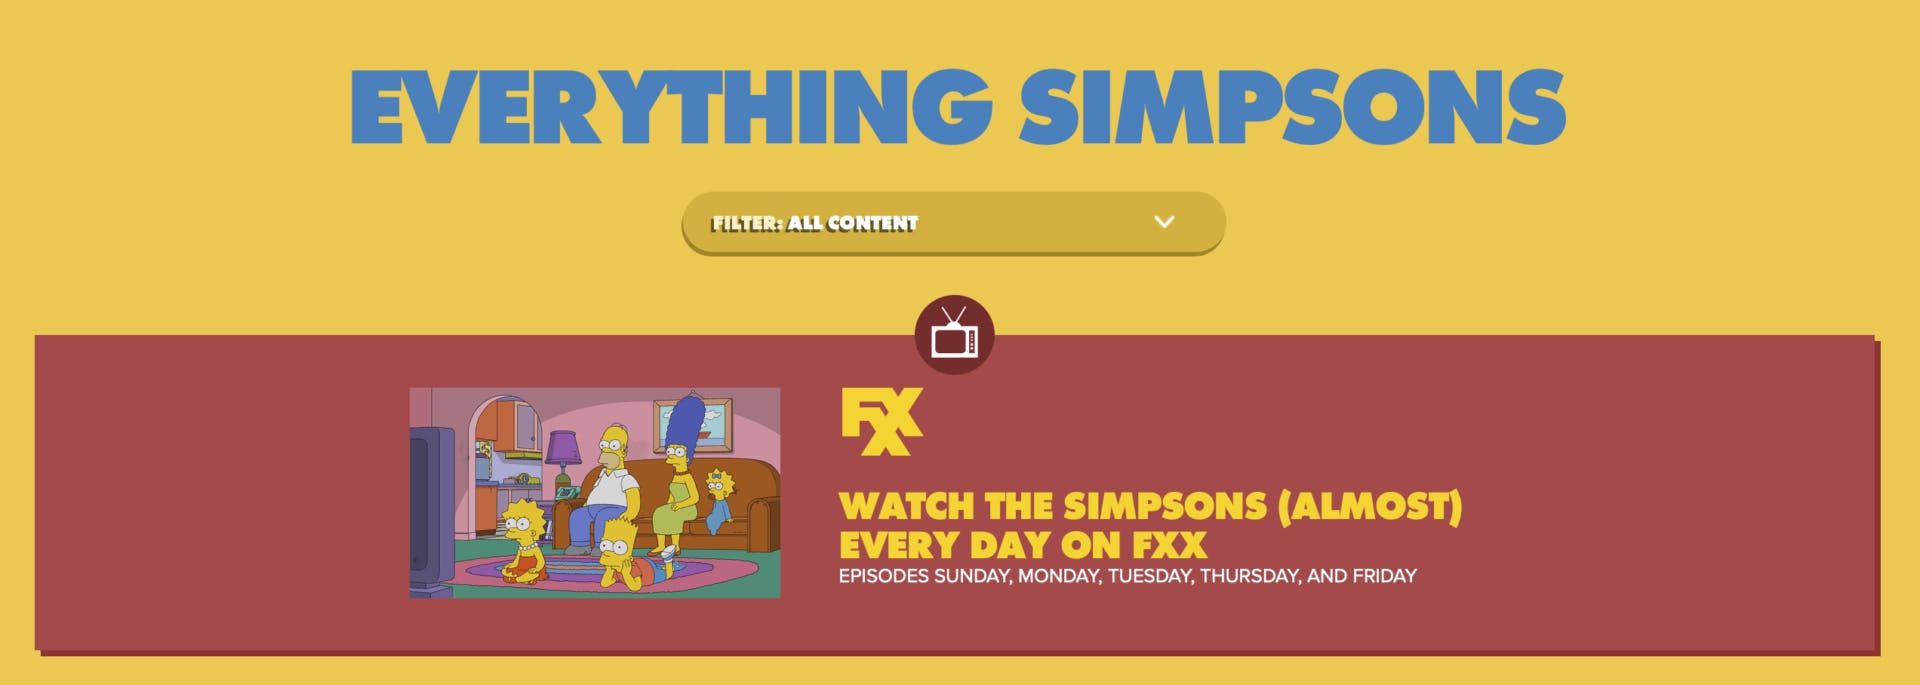 watch the simpsons season 31 on Simpsons World